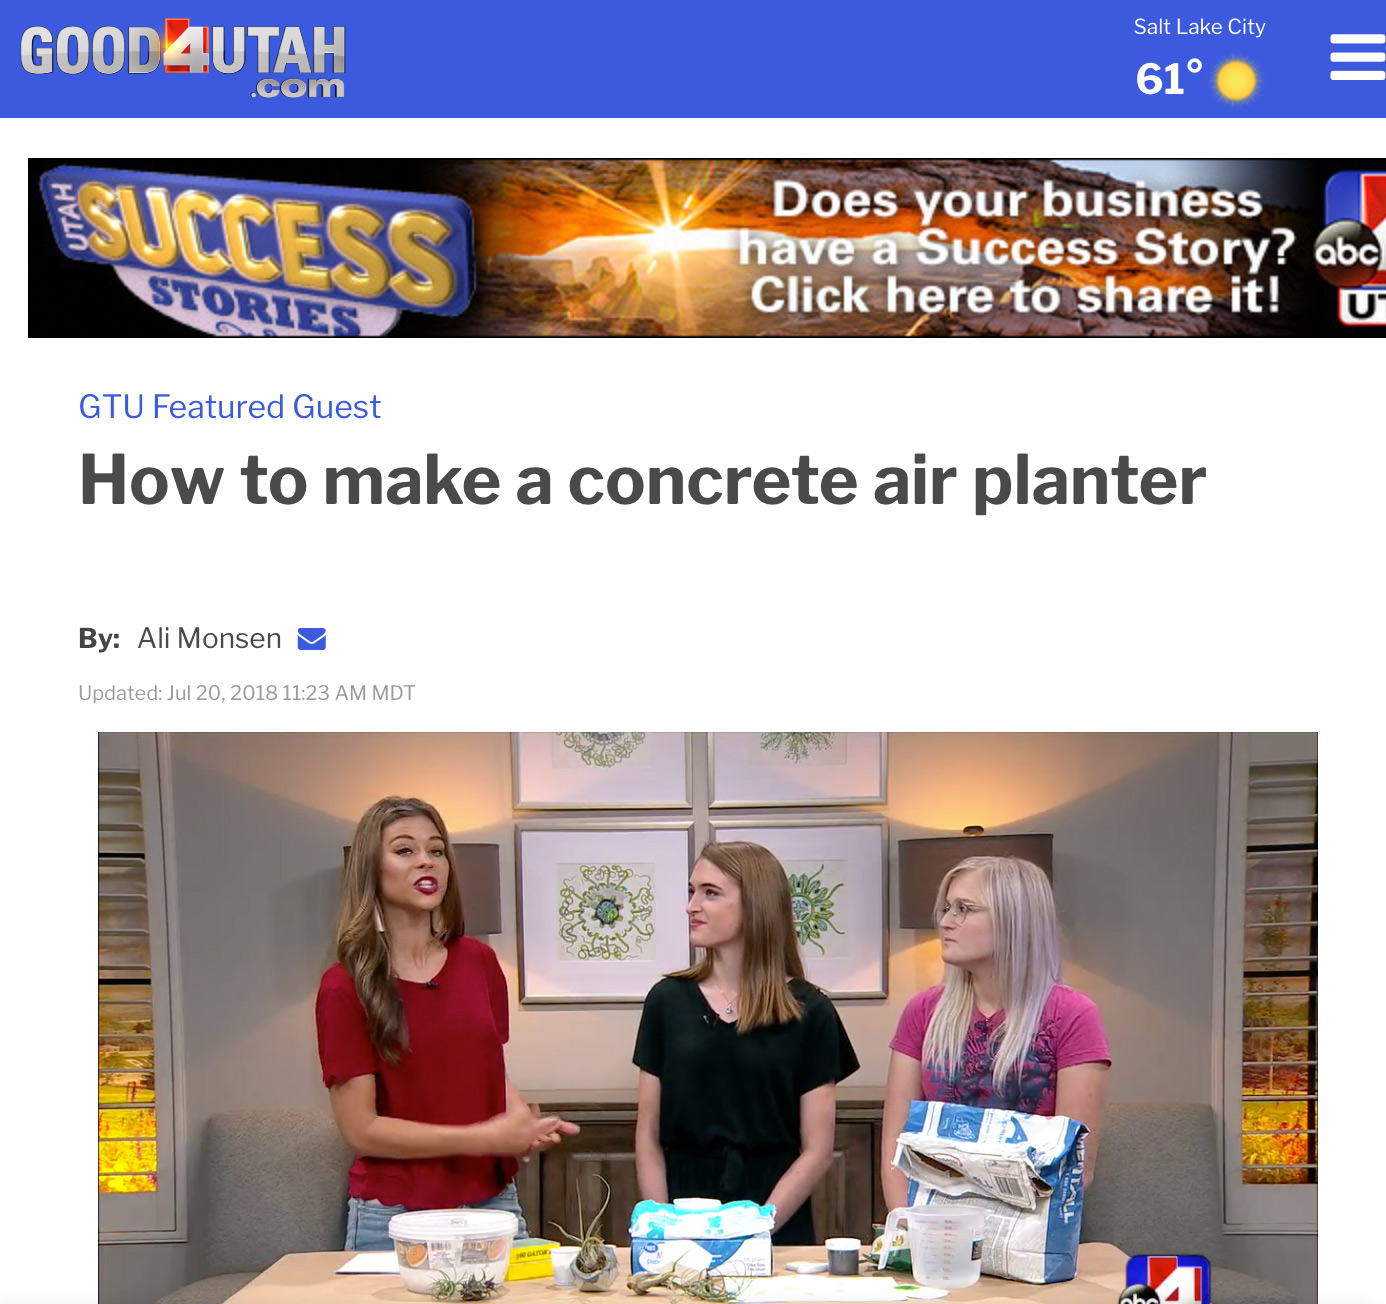 Good Things Utah: How to Make a Concrete Air Planter